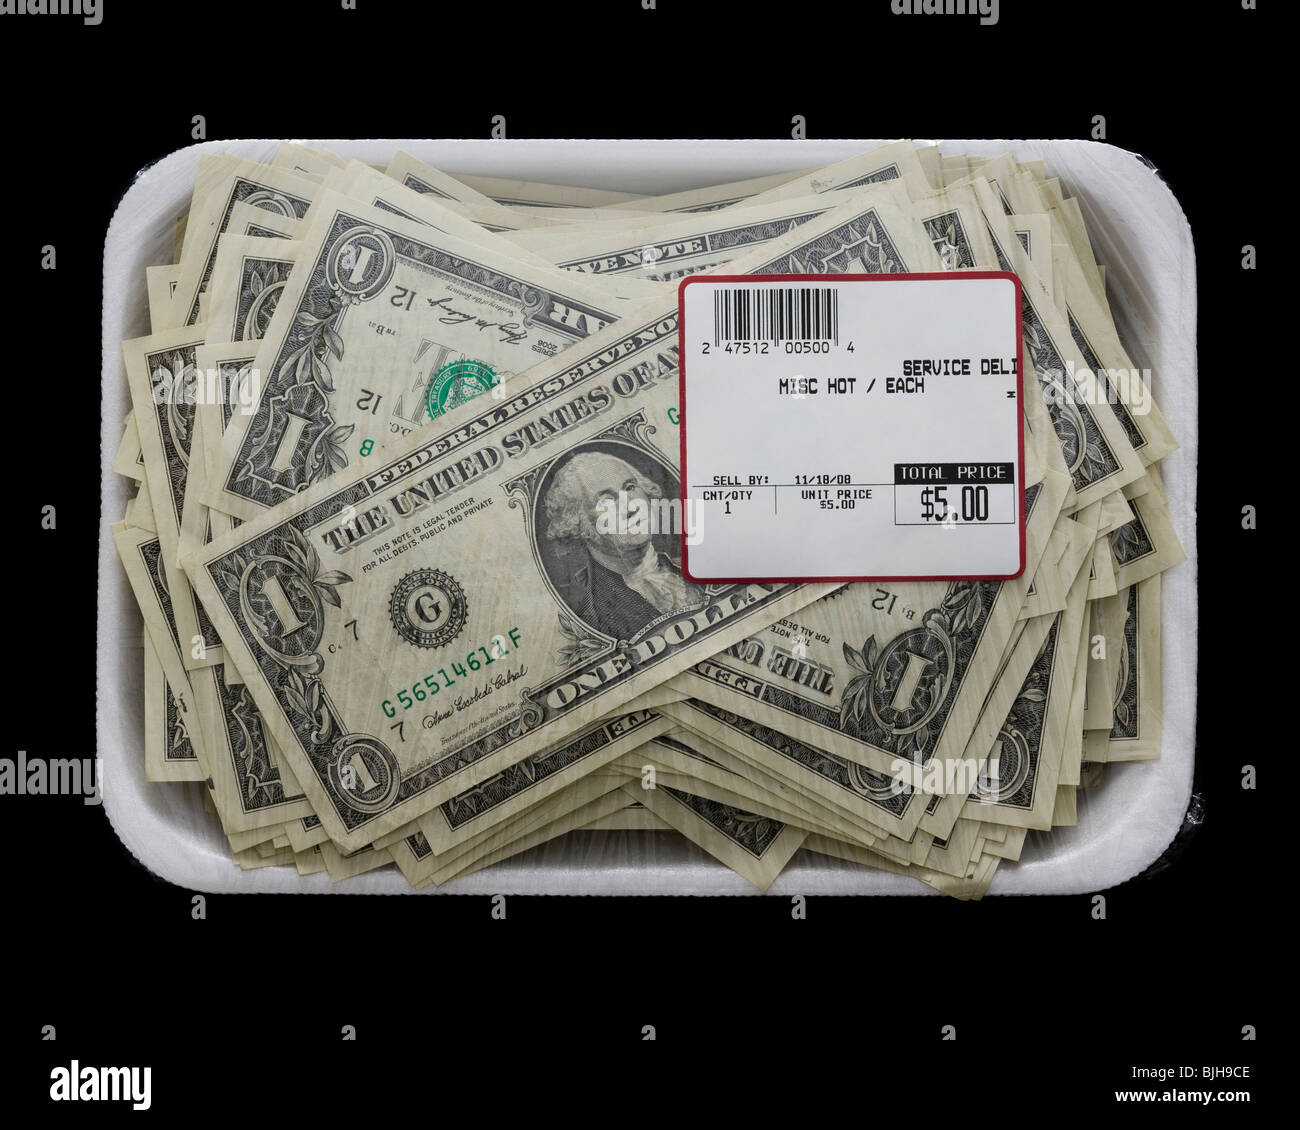 US-Dollar in einem Supermarkt Konturvereinfachung Paket Stockfoto